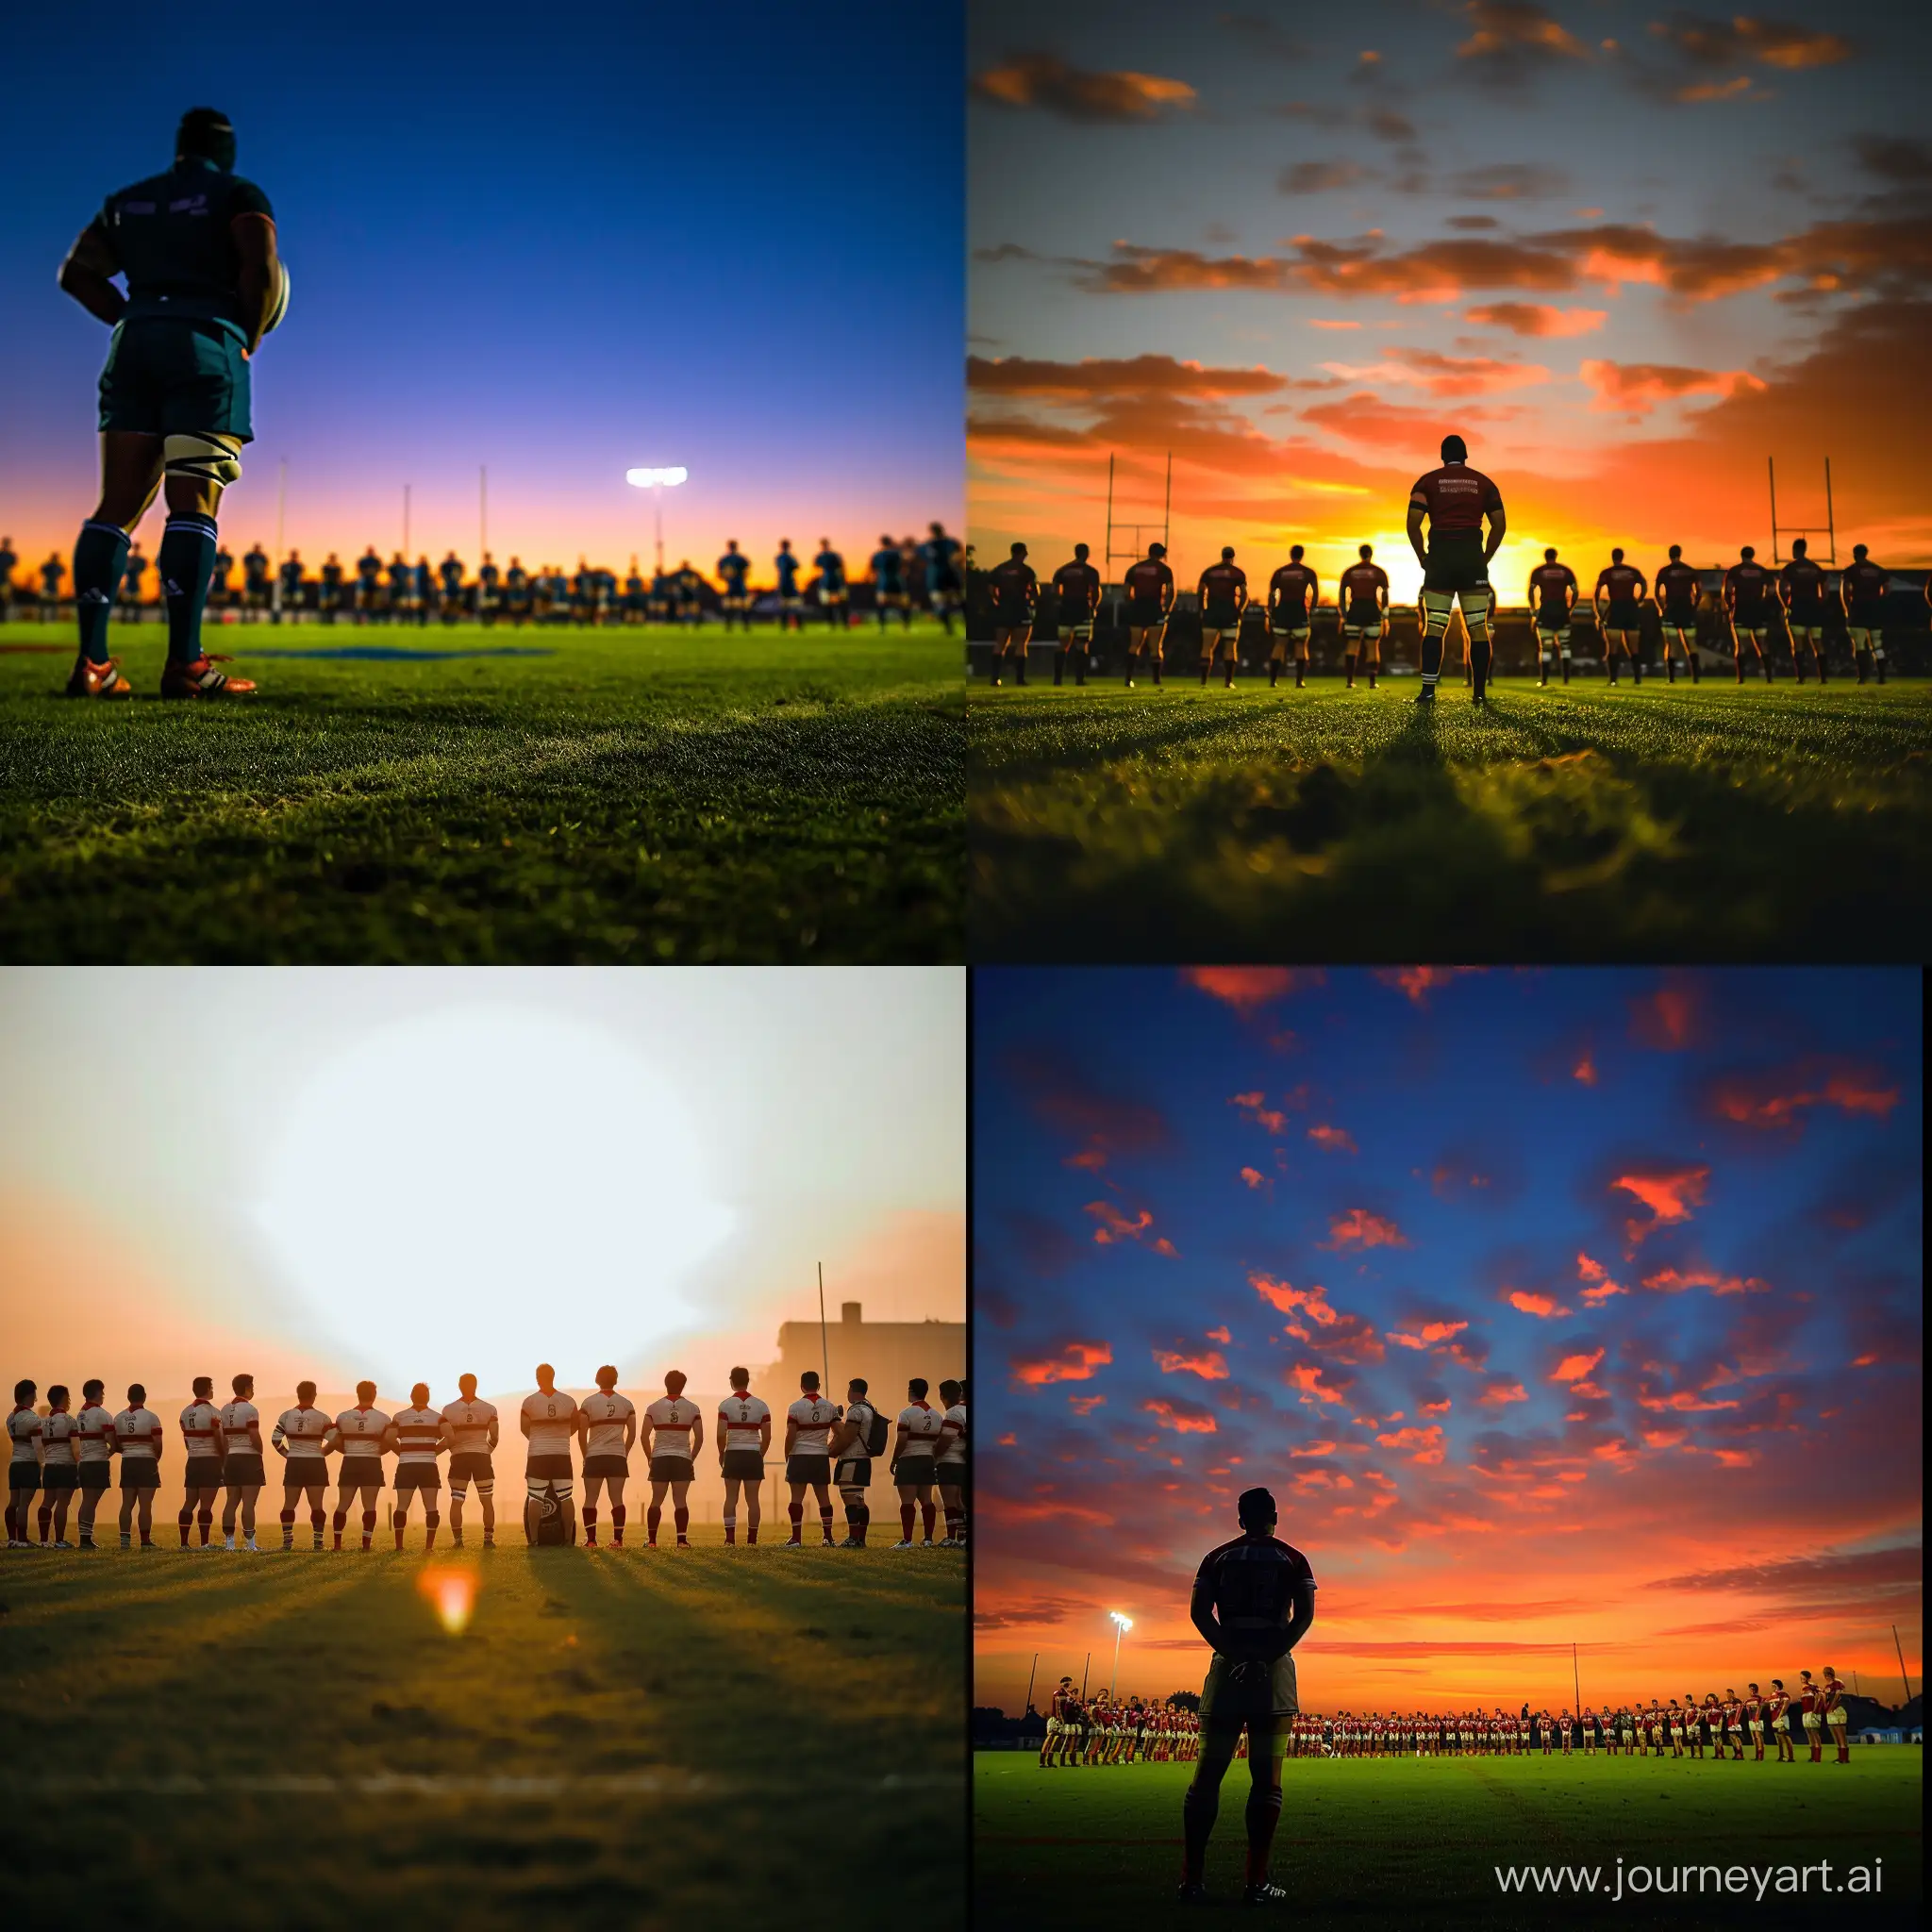 регбисты стоят на зеленом поле в закате солнца